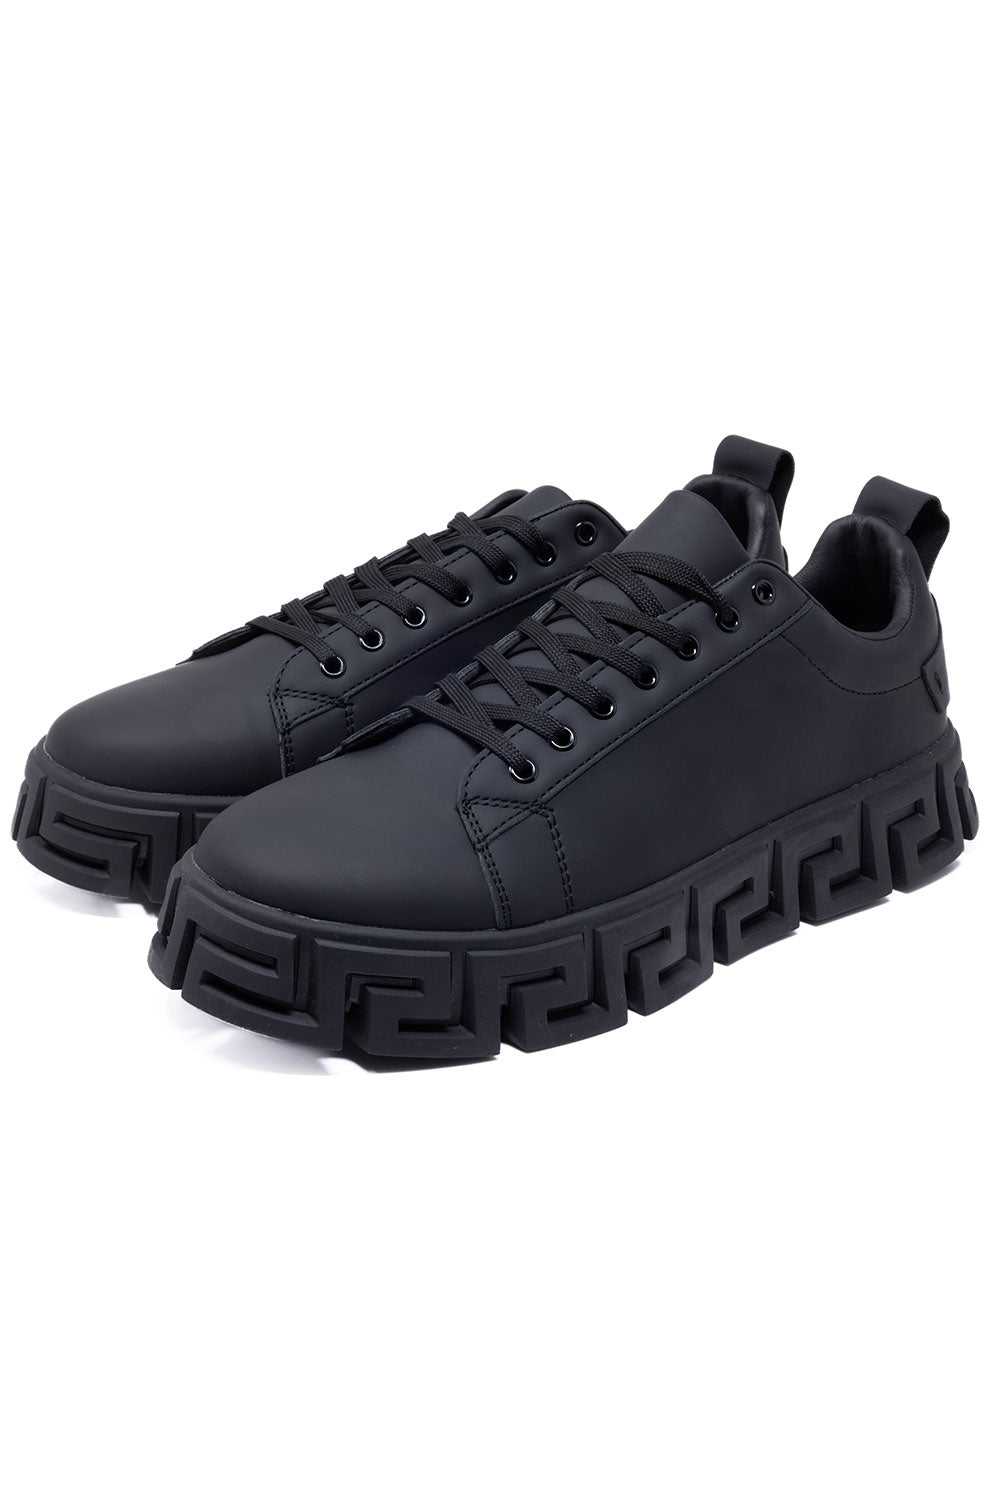 Barabas Men's Wholesale  Premium Greek Key Pattern Sole Sneakers 4SK06 Black